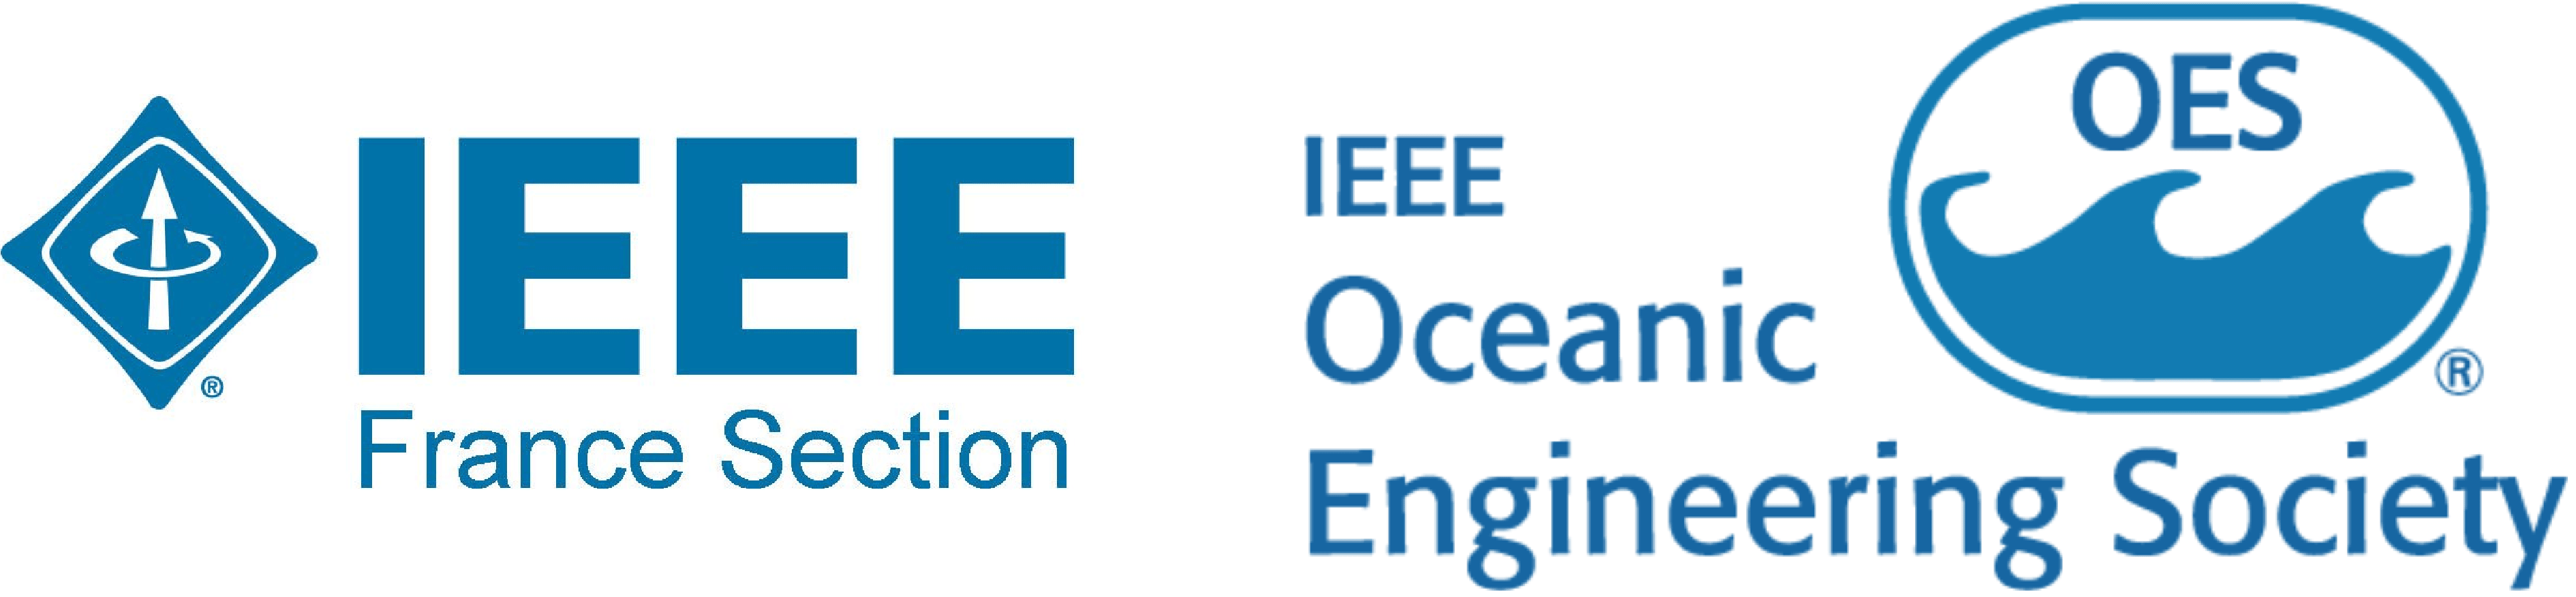 IEEE_OES_logo_1.png